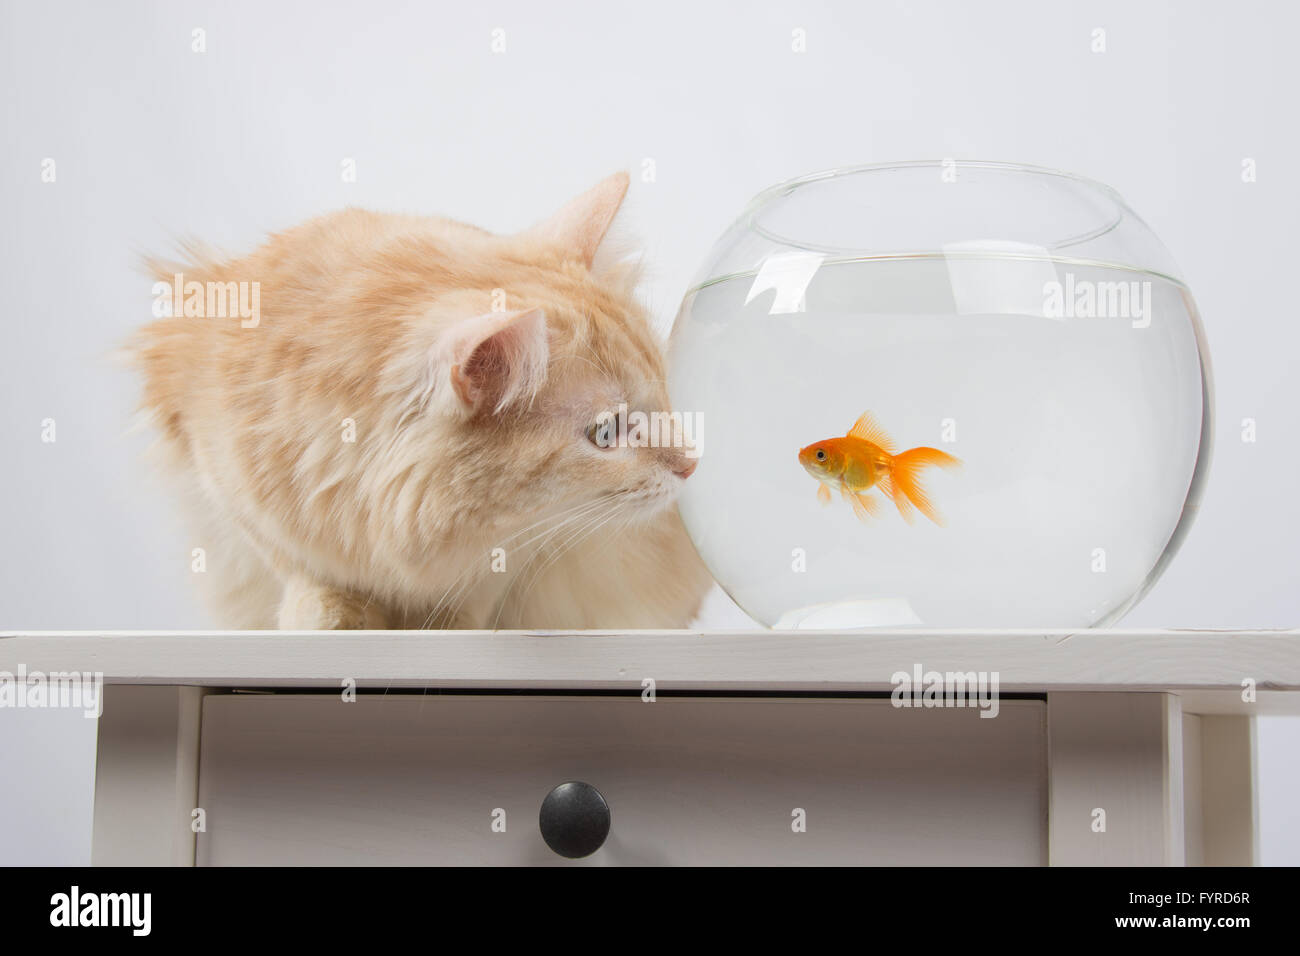 Cat looking at a goldfish in an aquarium Stock Photo